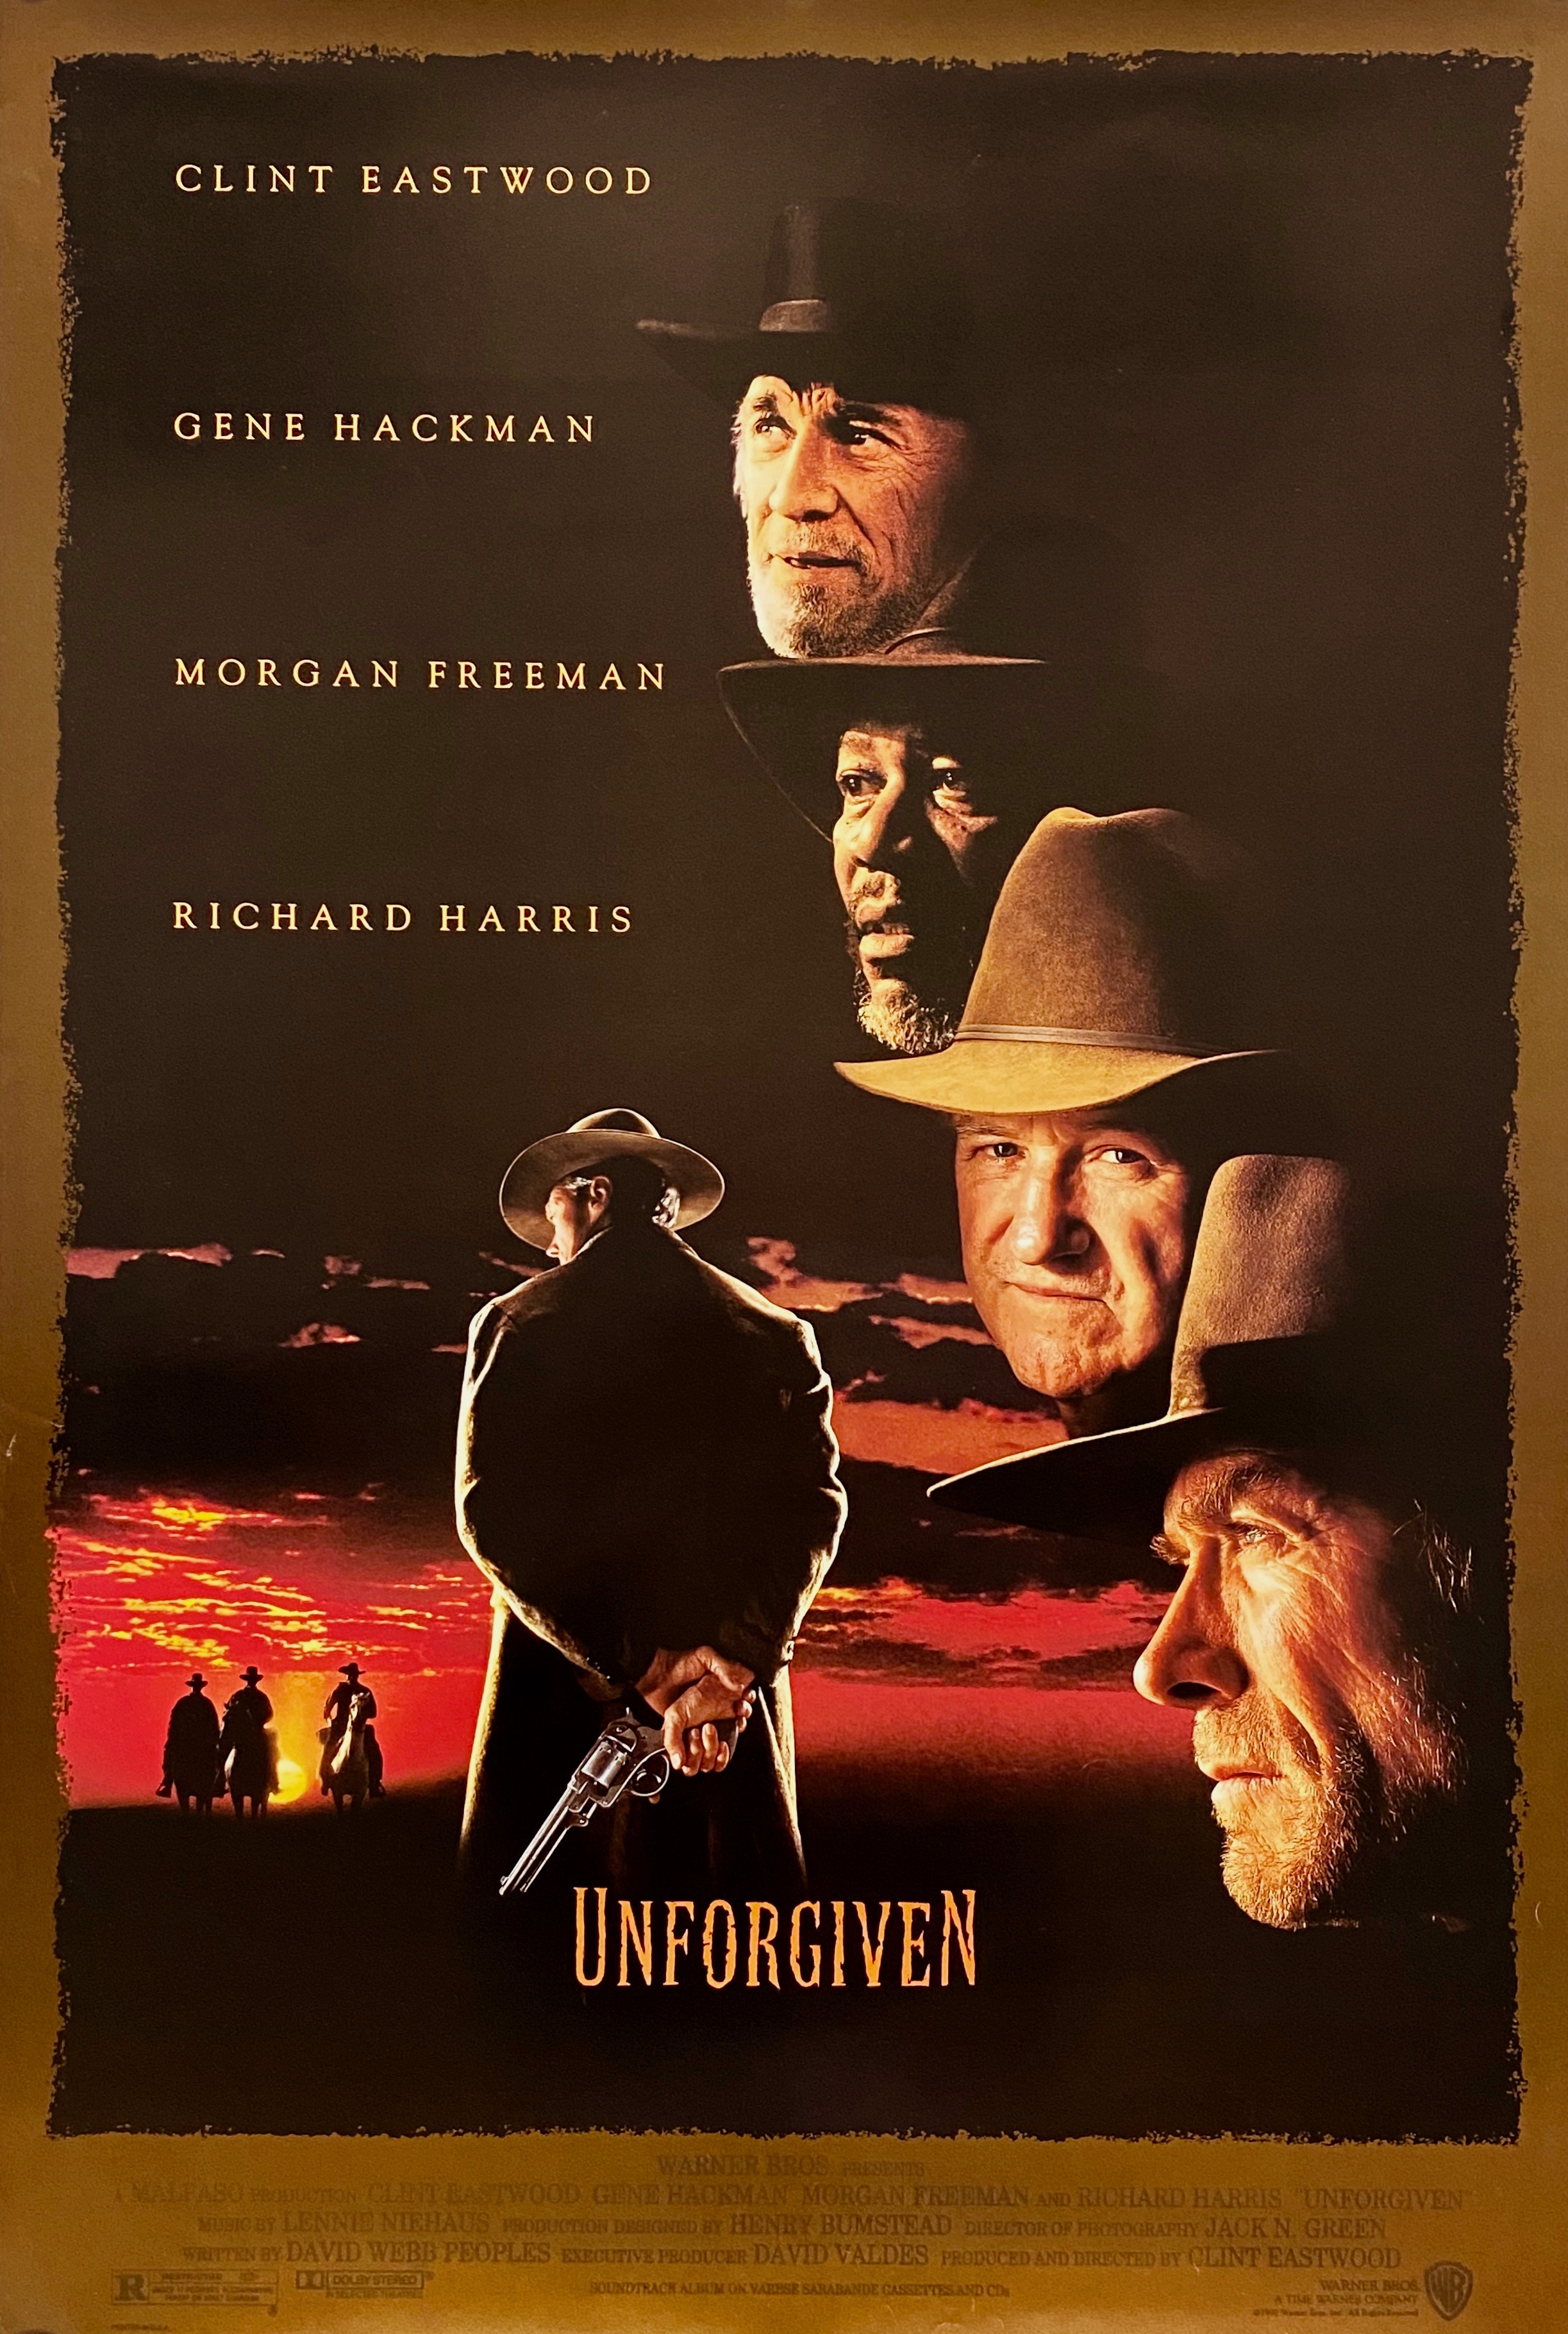 Clint Eastwood Cowboy Poster